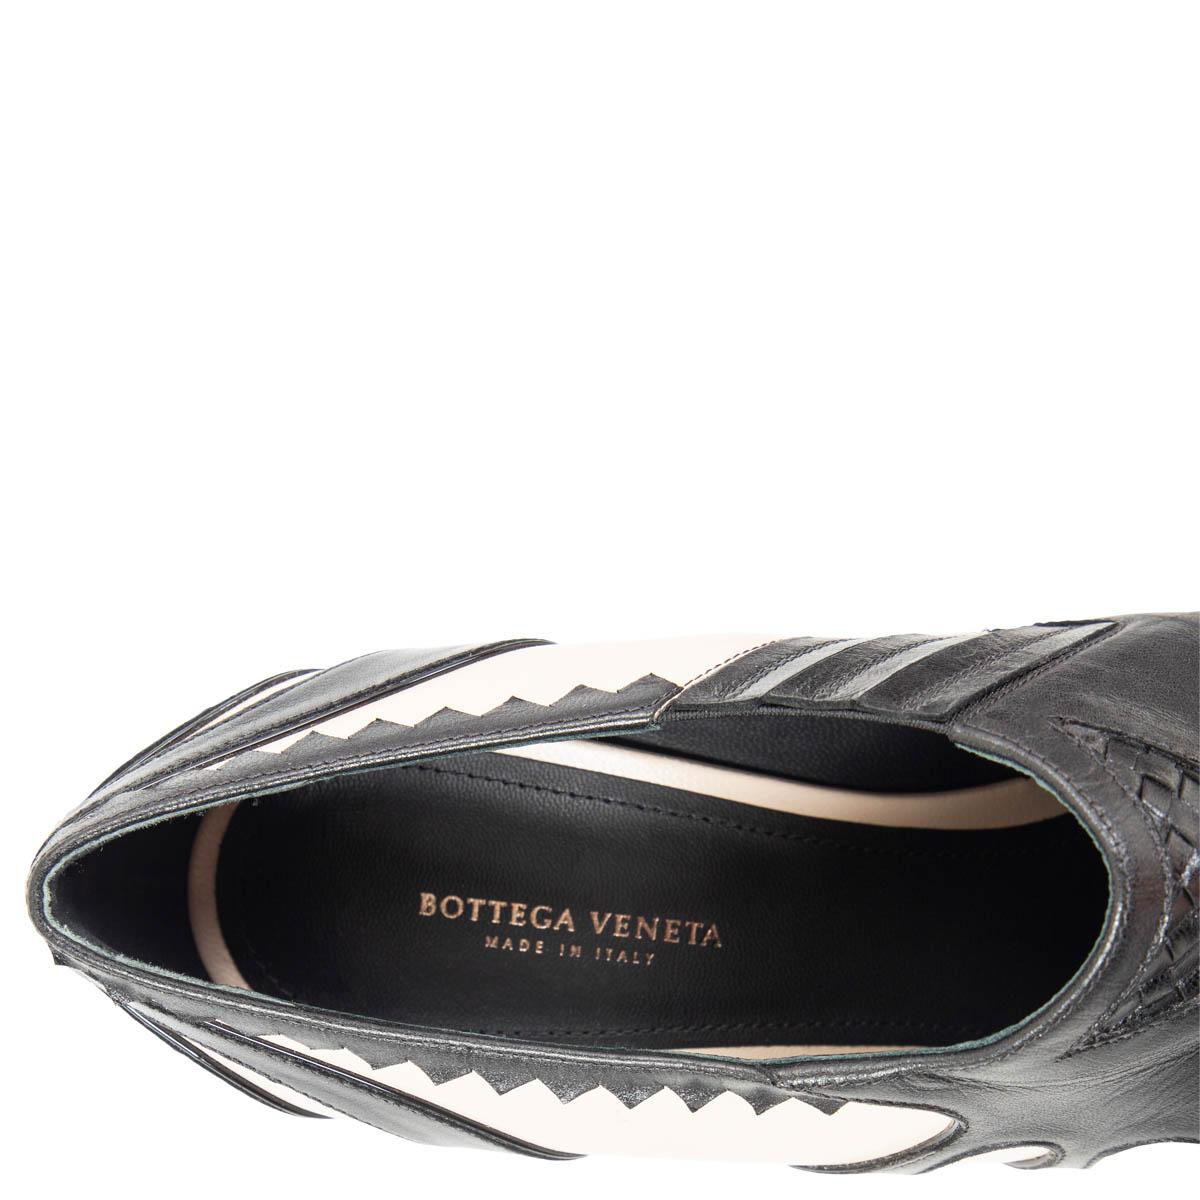 BOTTEGA VENETA ivory & black leather POINTED TOE ANKLE Boots Shoes 40 For Sale 1